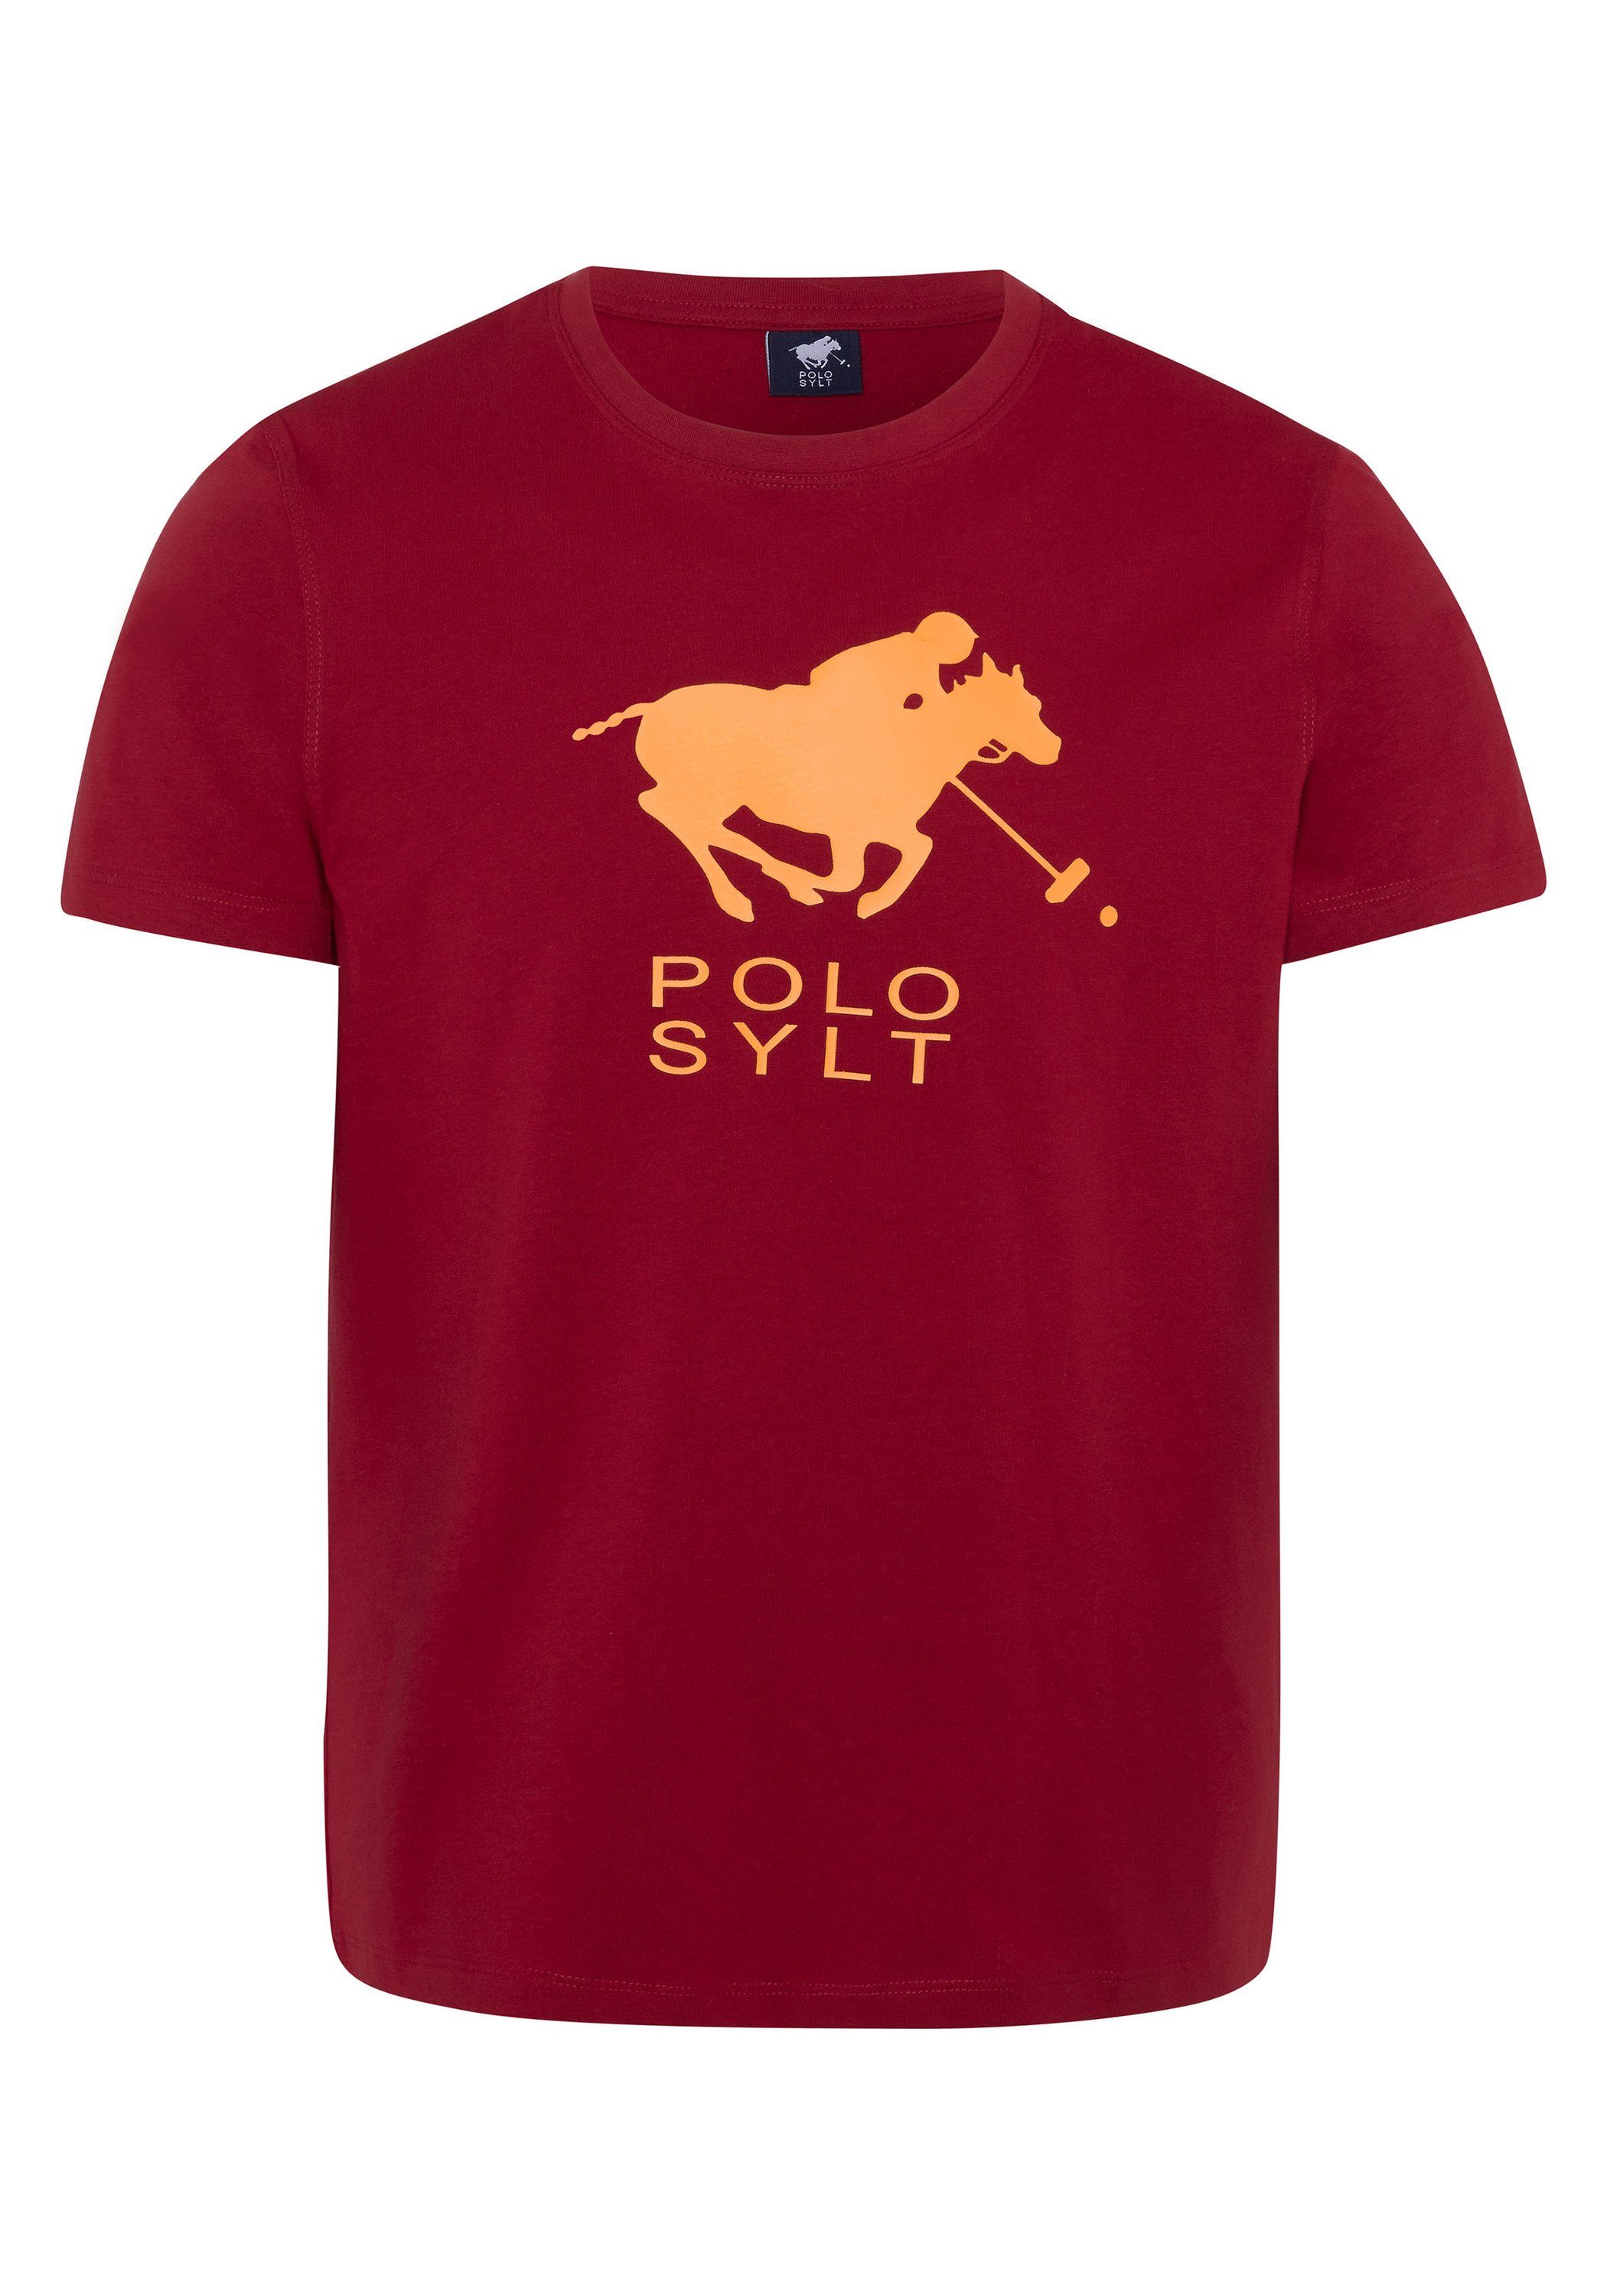 Logo Sylt Print-Shirt Neon Polo Pepper Chili Frontprint mit